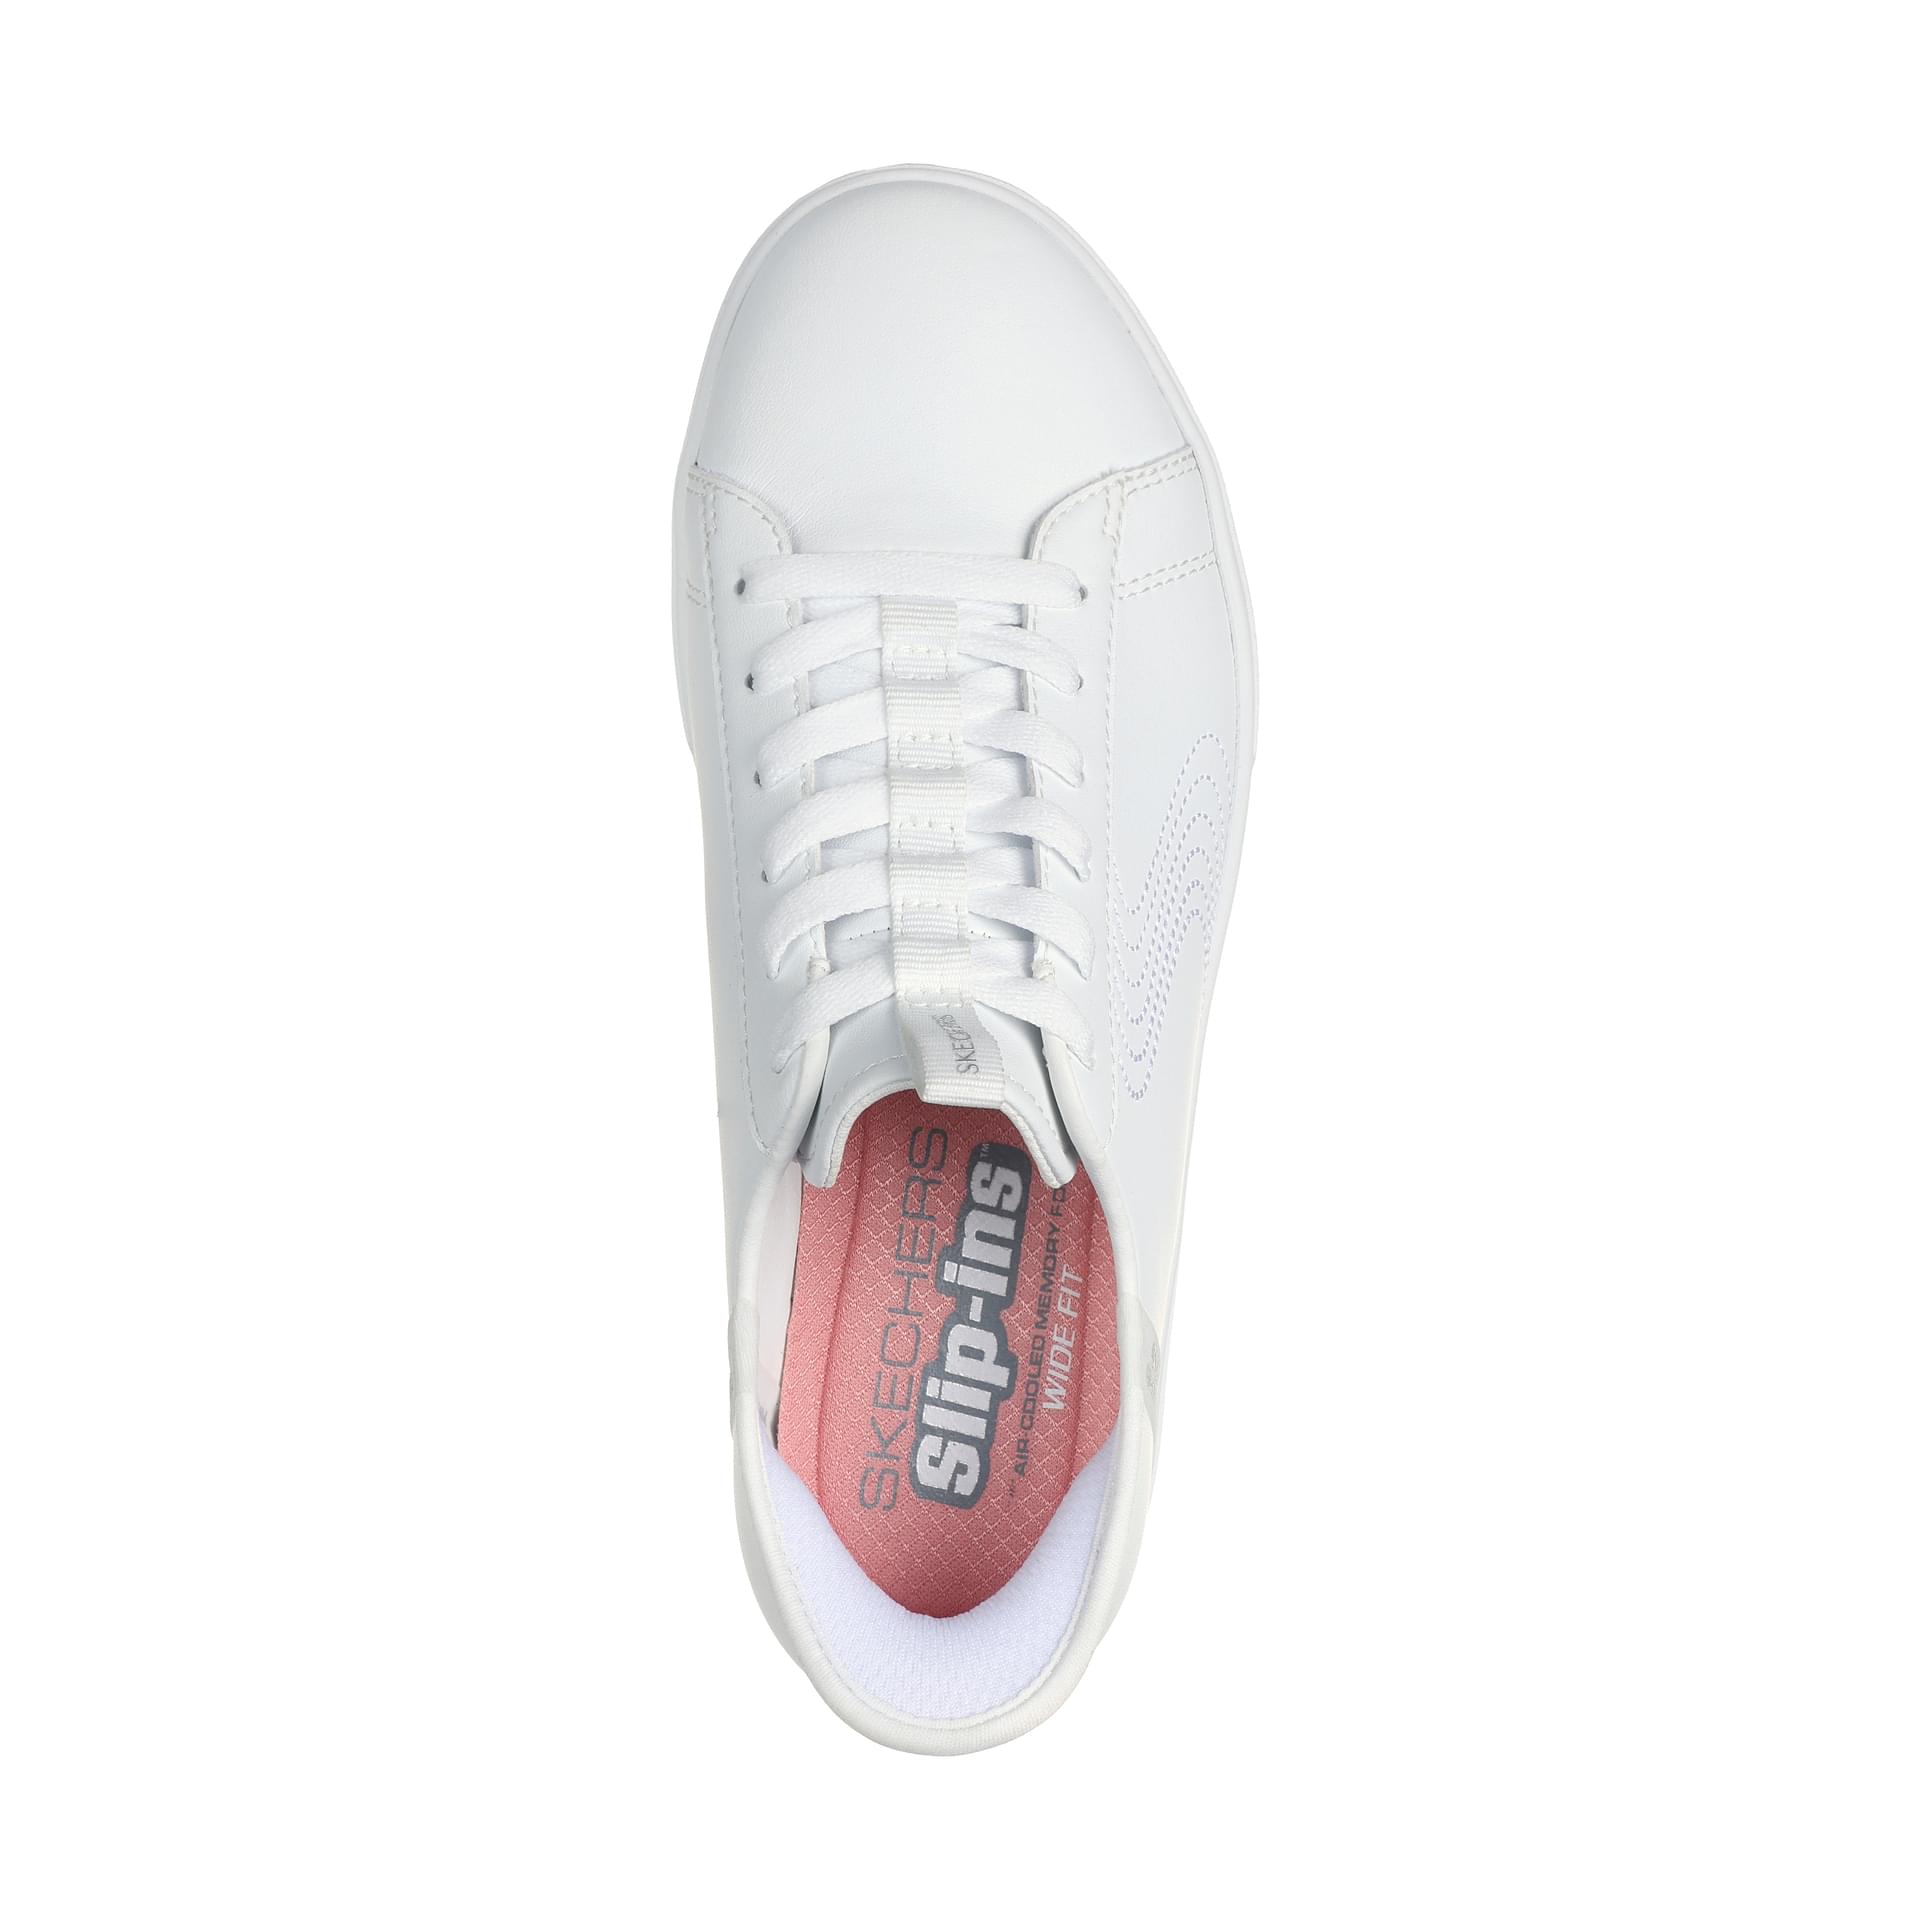 Skechers Eden LX Sneakers 185008 in White